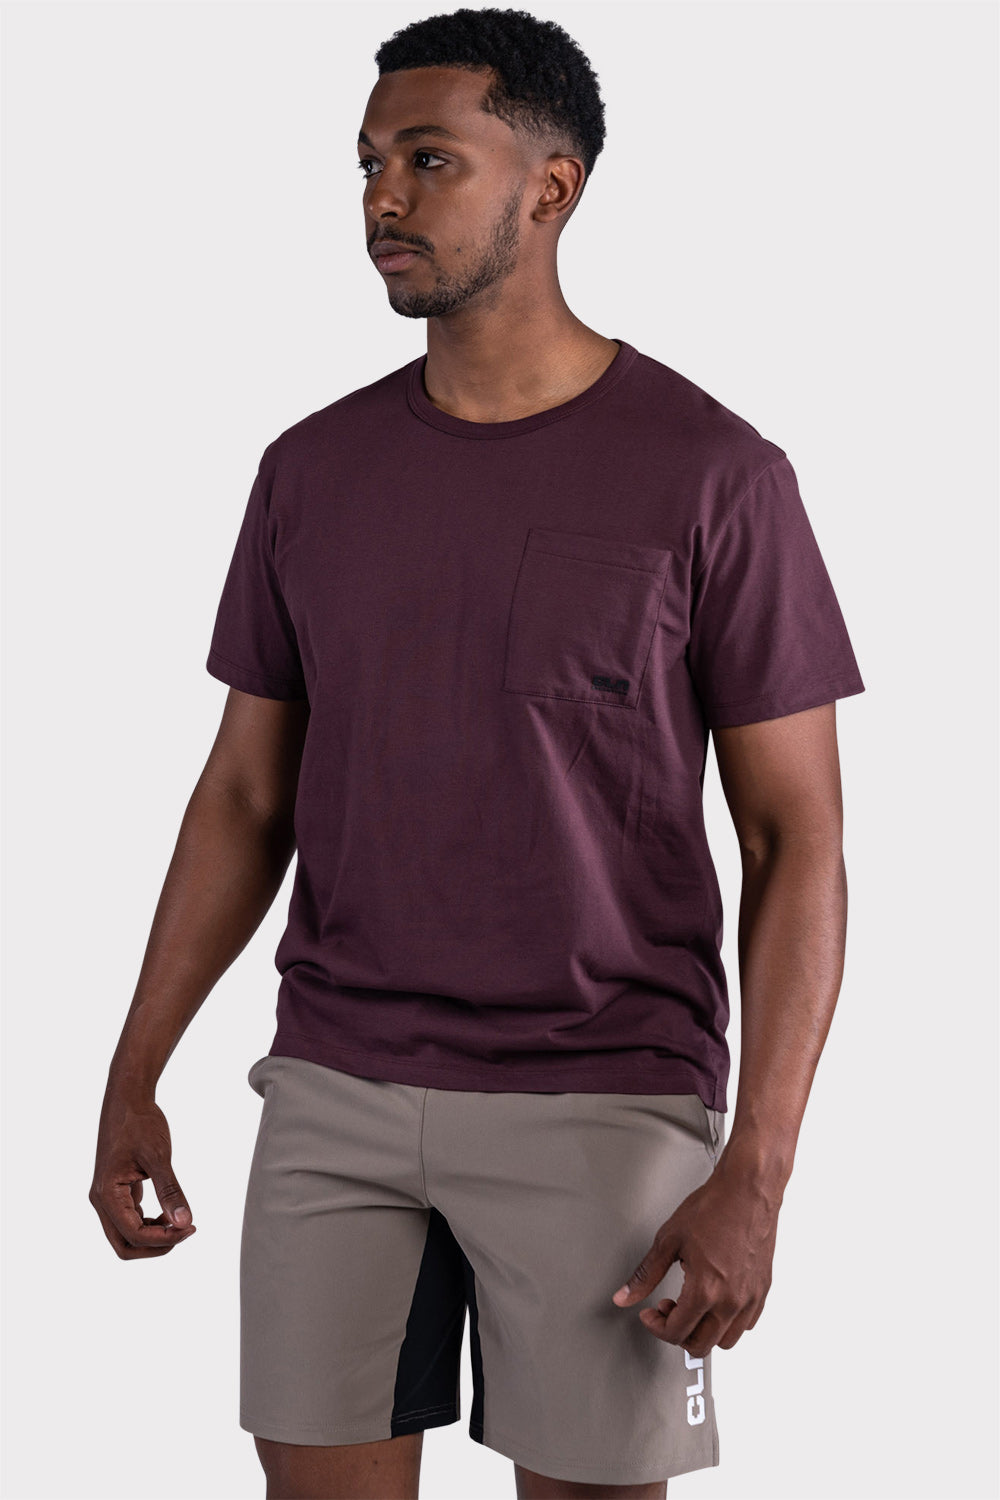 CLN Rick T-Shirt - Vino Oscuro  